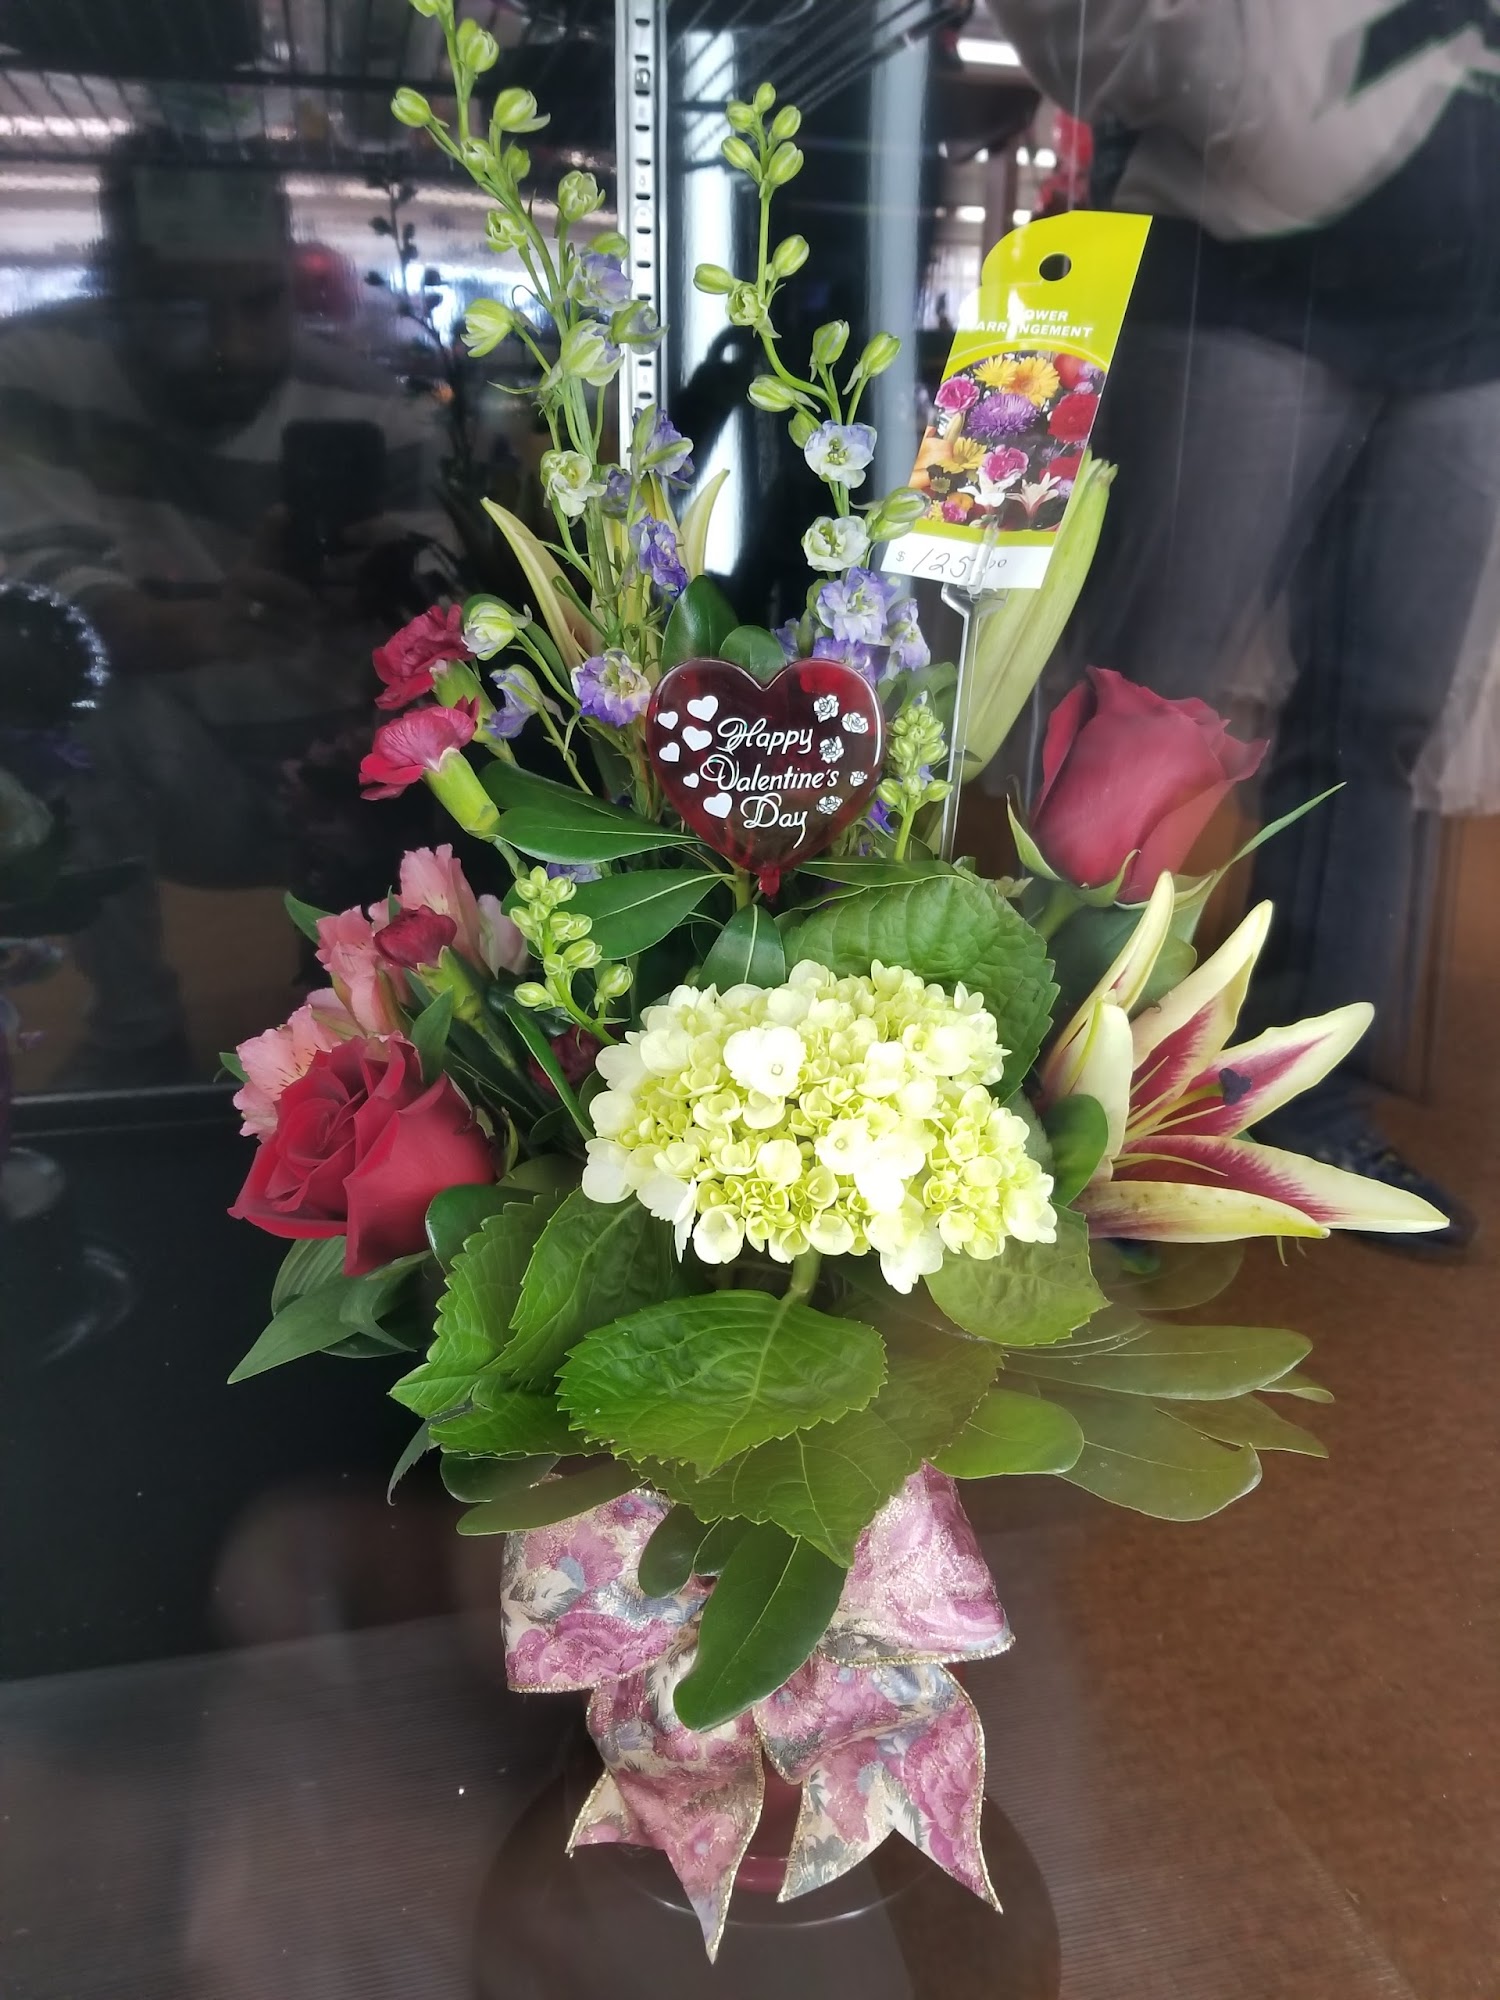 Custer Floral & Gifts 821 S D St, Broken Bow Nebraska 68822